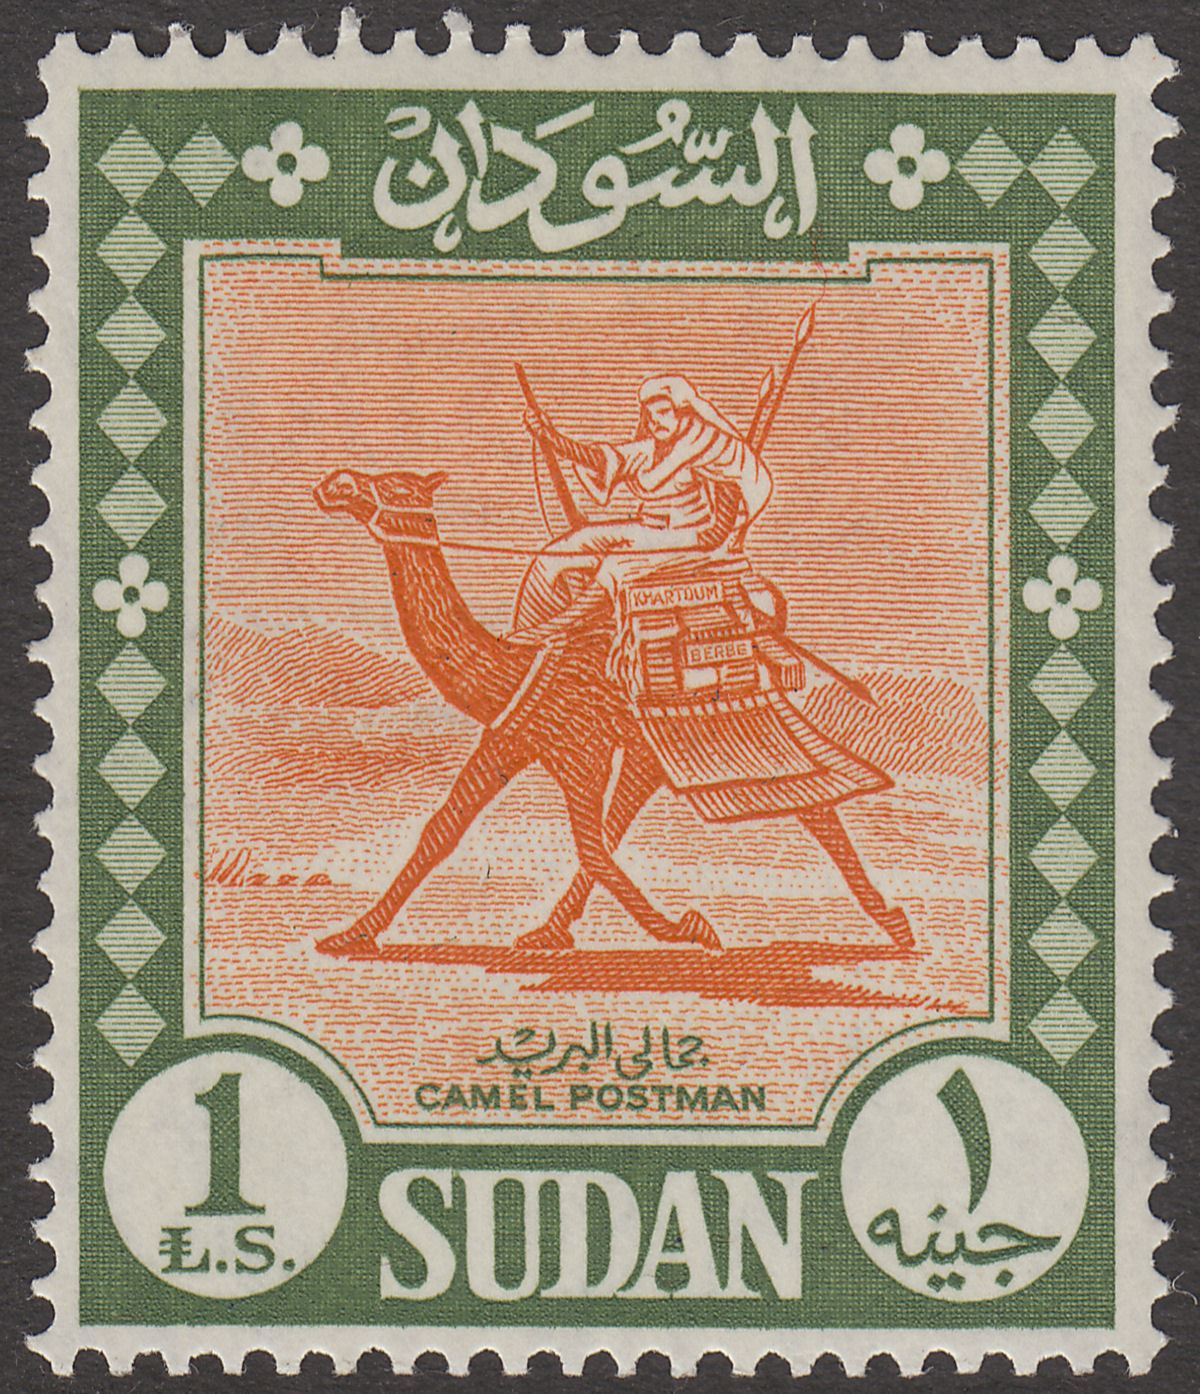 Sudan 1962 KGV Camel Postman £S1 Orange-Brown + Deep Olive Mint SG184 cat £20